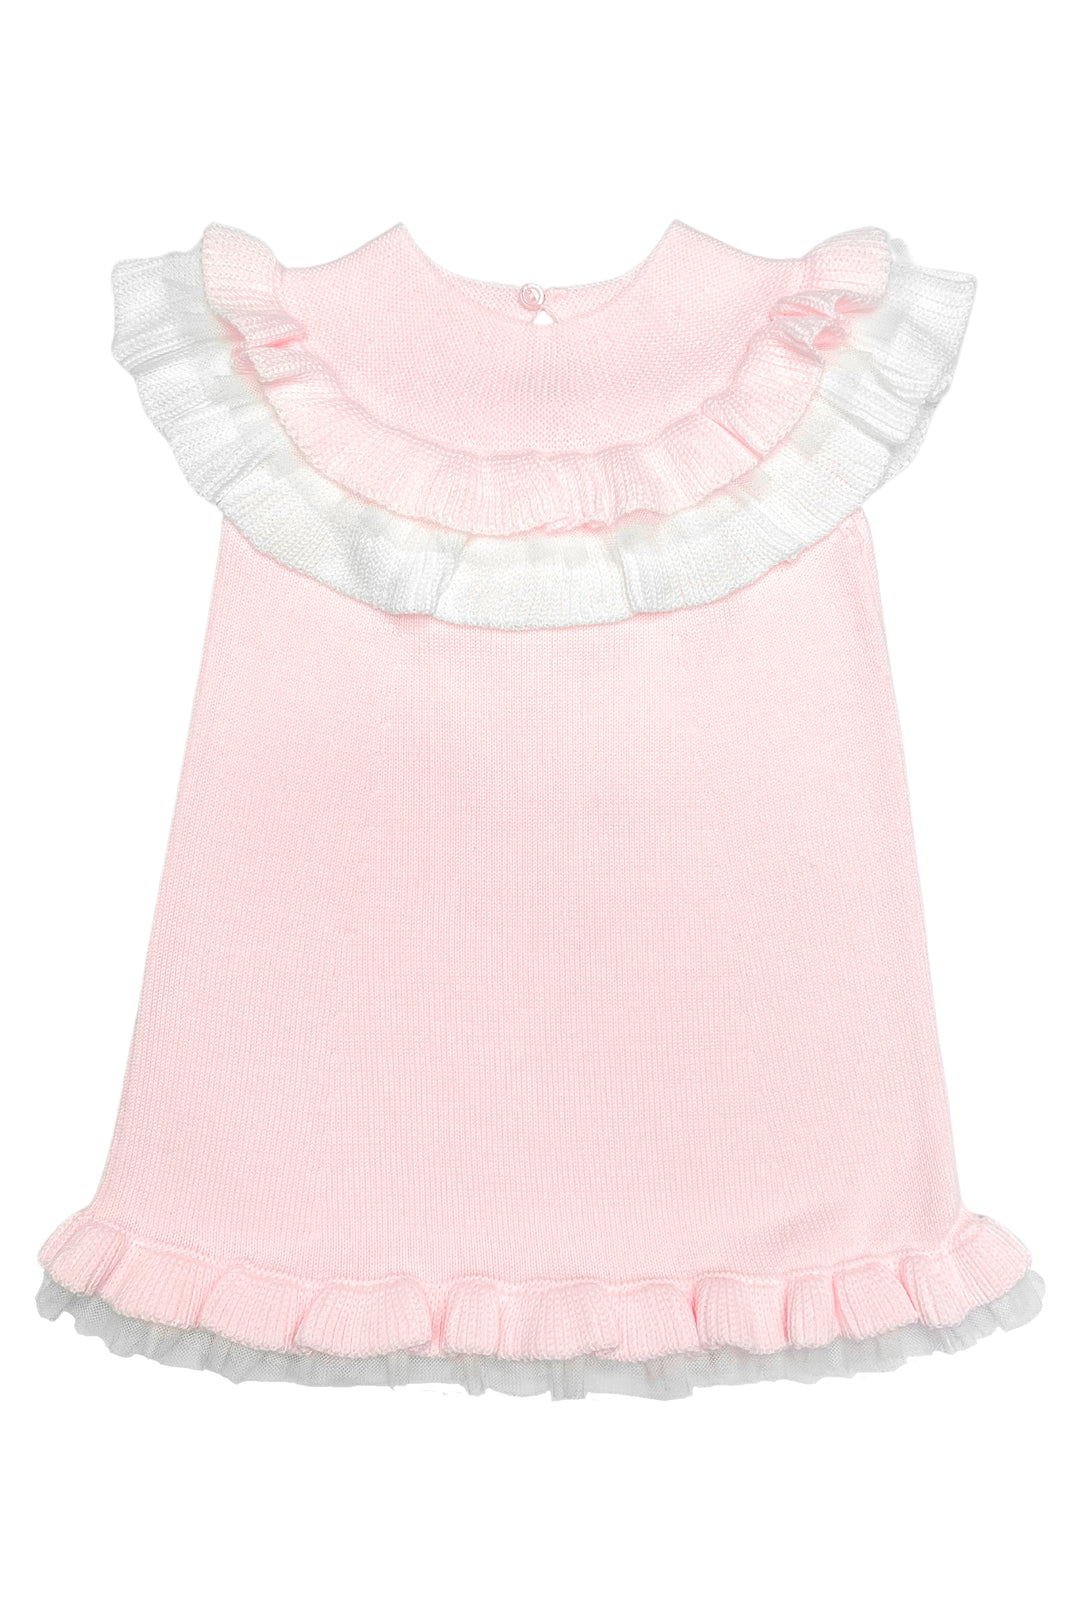 Granlei "Giselle" Baby Pink Knit Tulle Dress | Millie and John